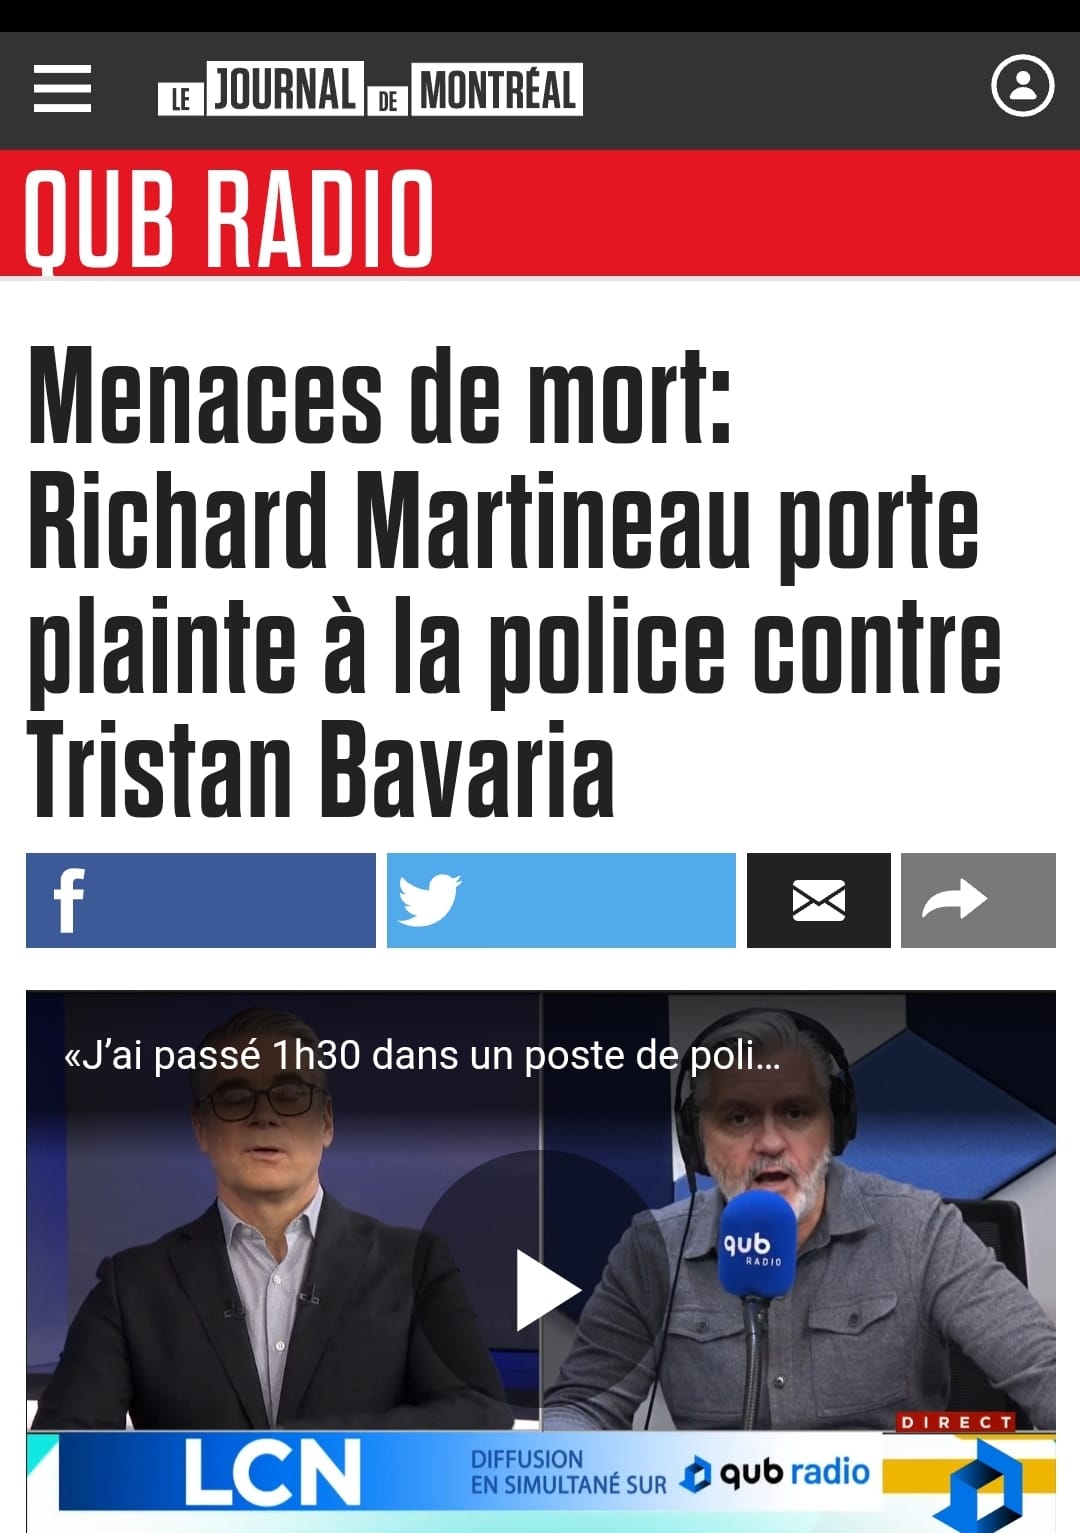 martineau-porte-plainte-a-la-police.jpg